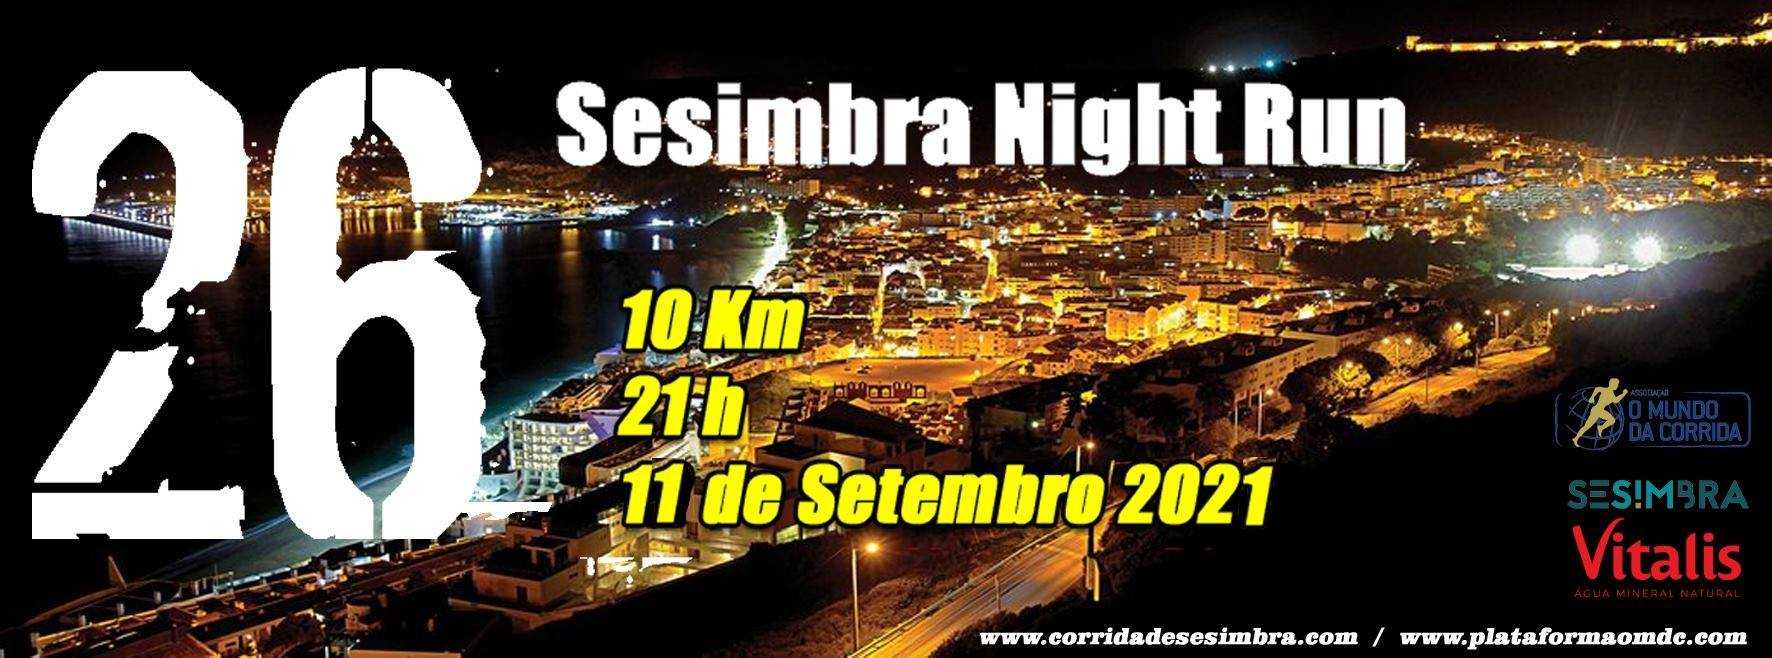 Sesimbra Night Run 2021